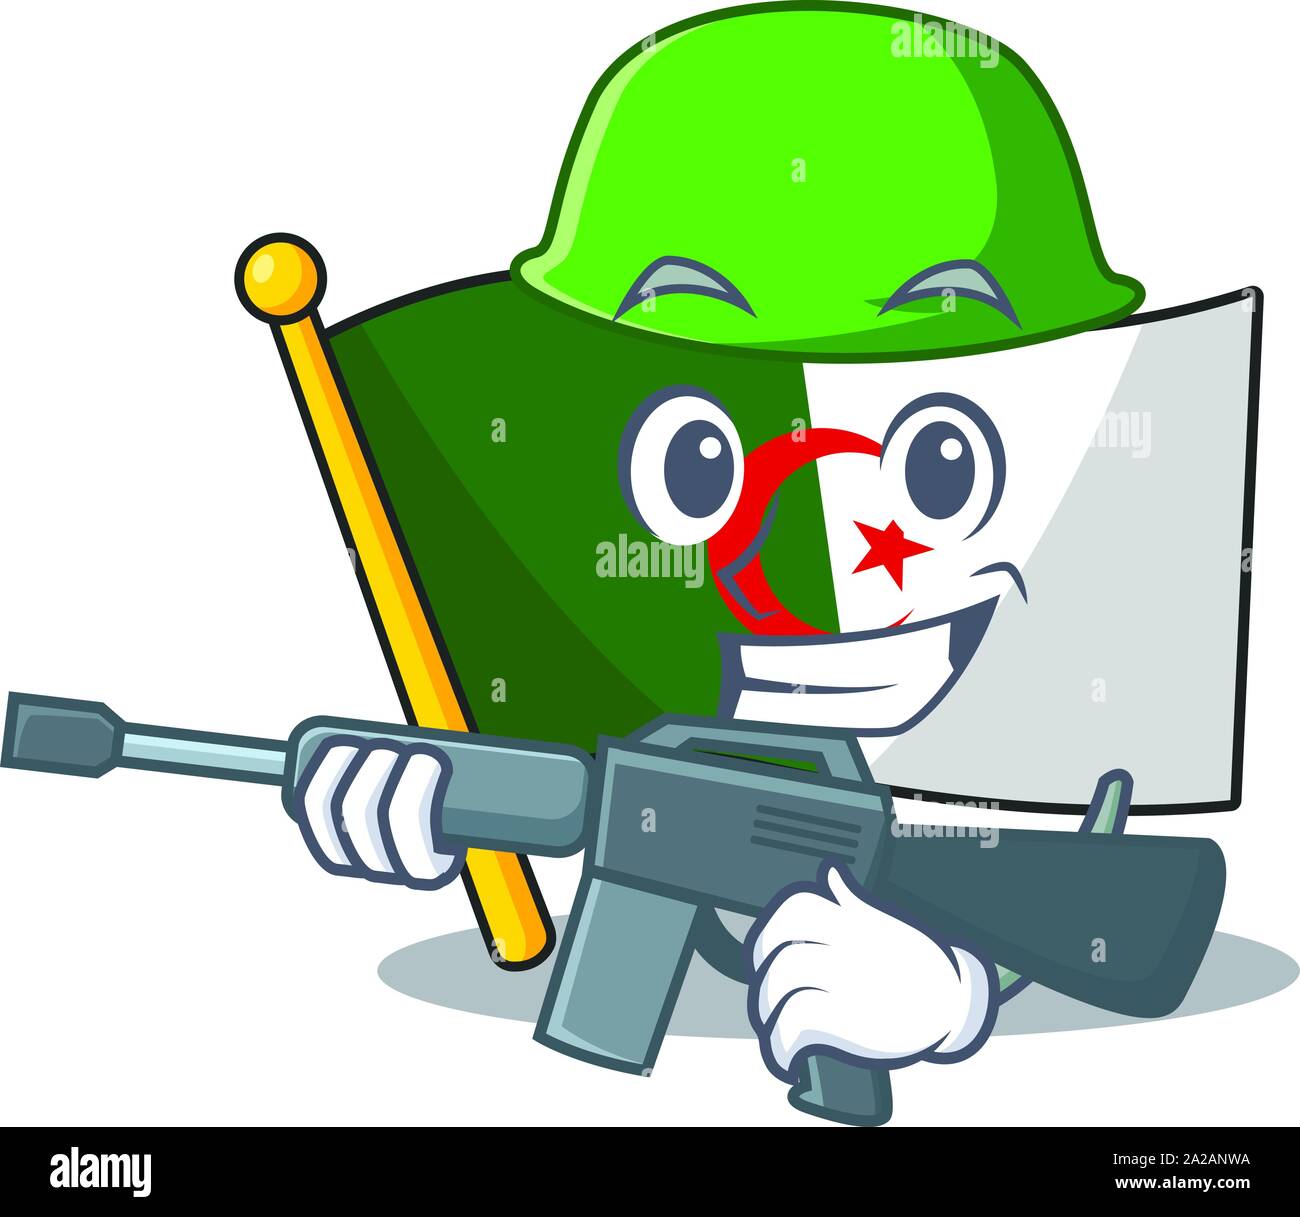 Army flag algeria cartoon isolated the mascot Stock Vector